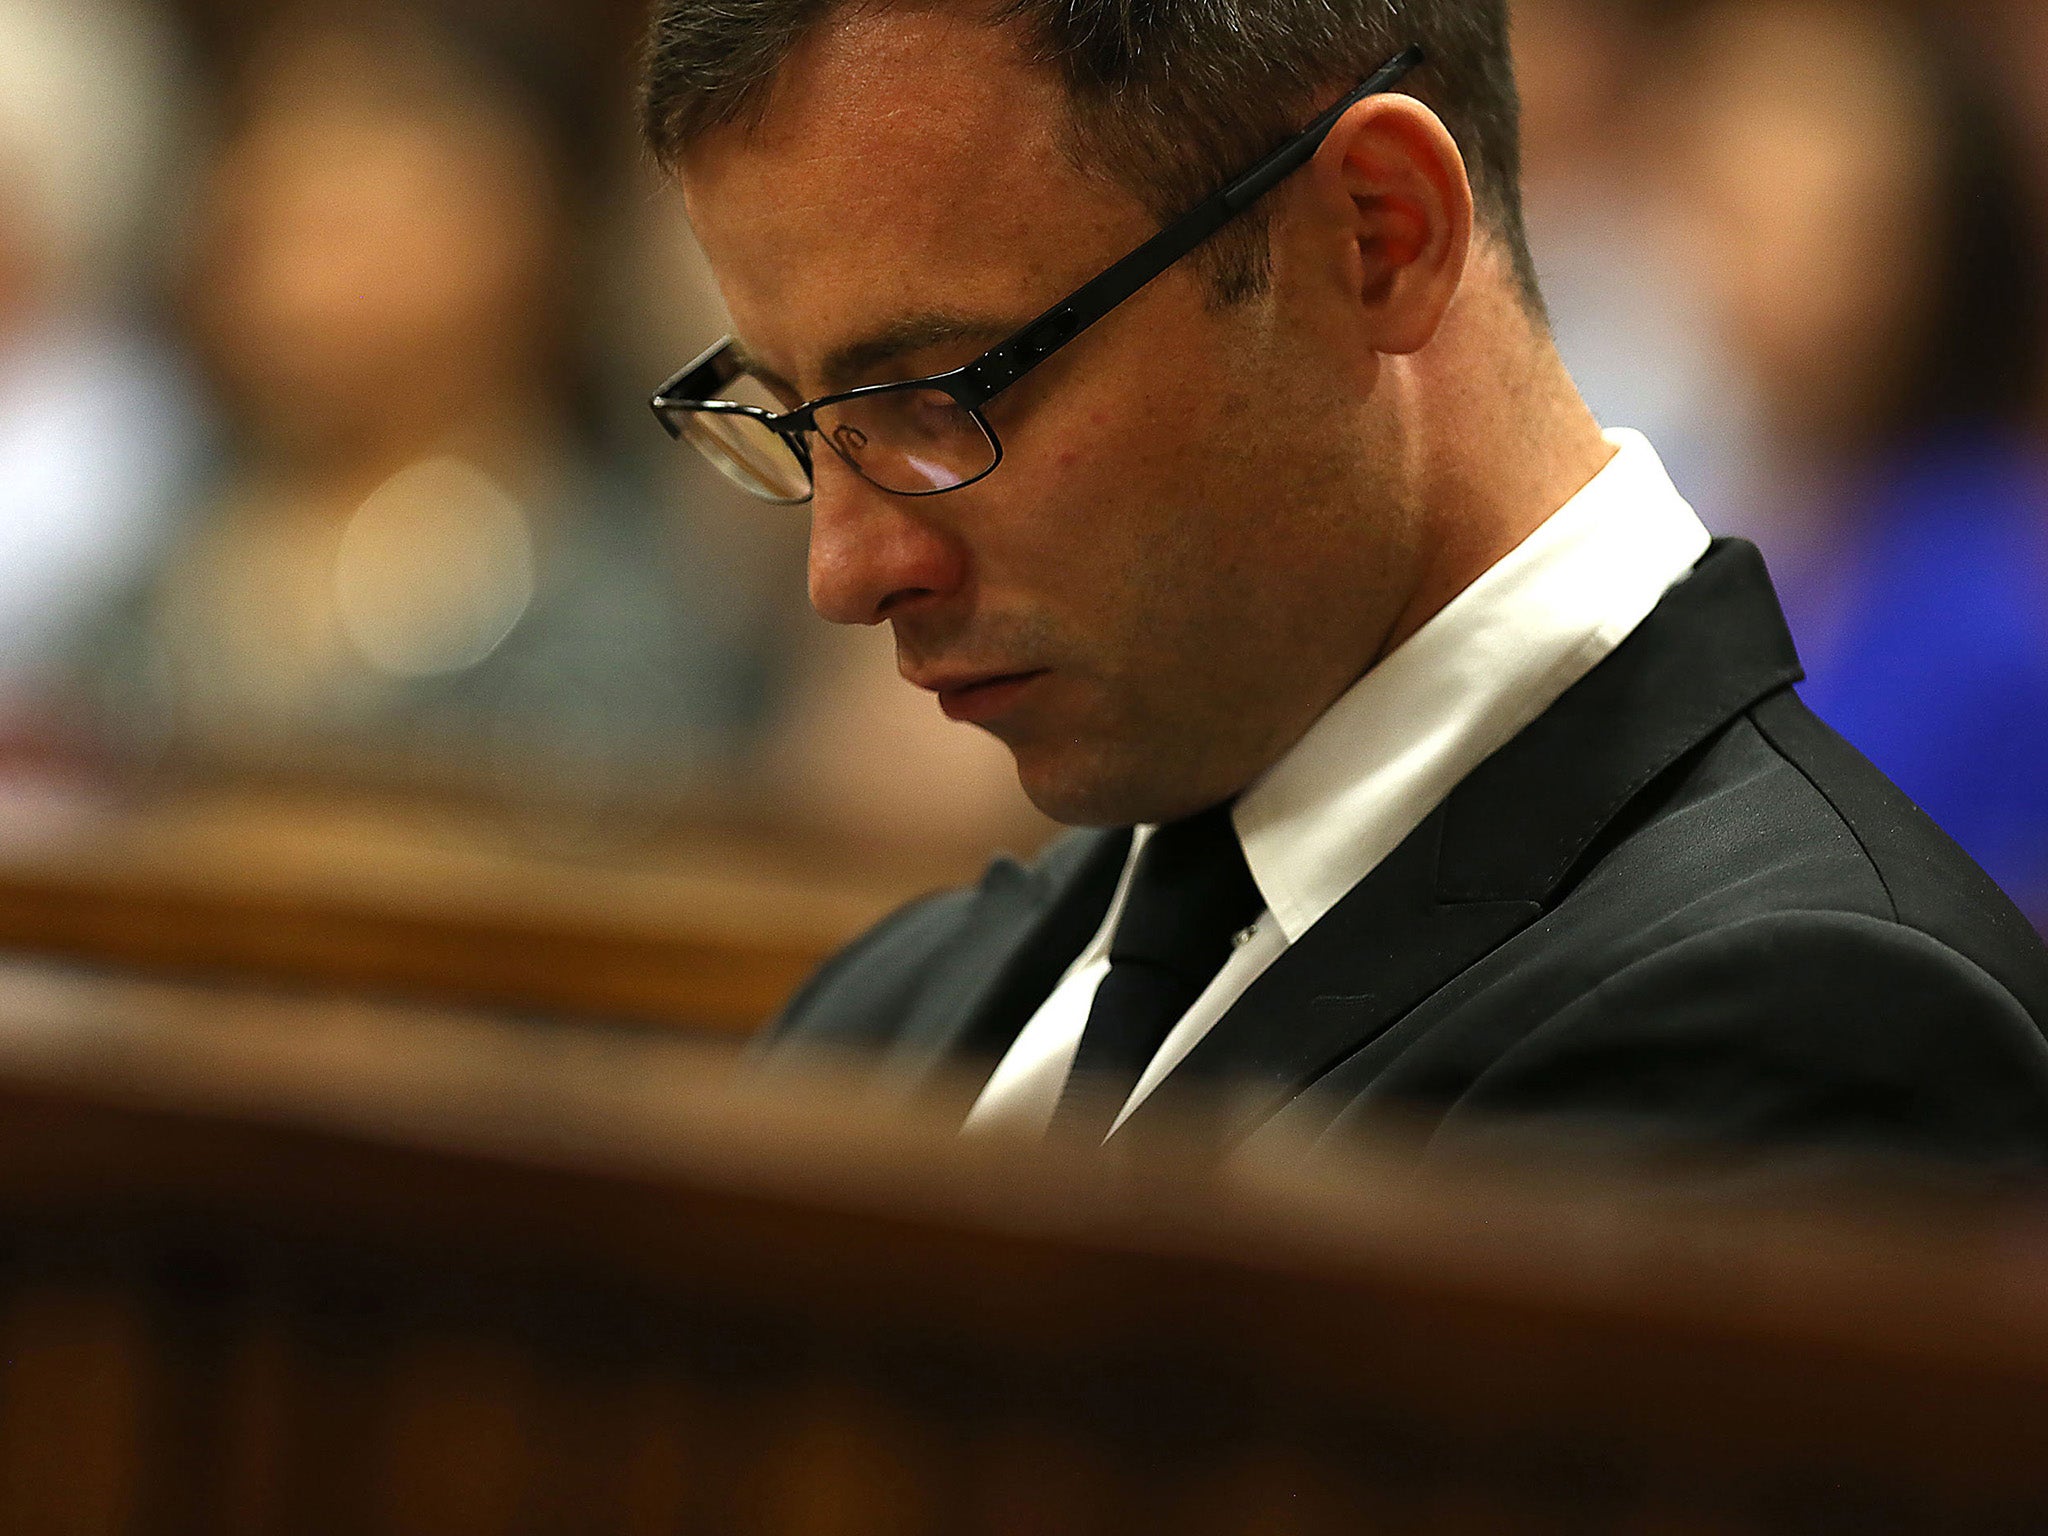 &#13;
Oscar Pistorius during his sentencing hearing in the Pretoria High Court.&#13;